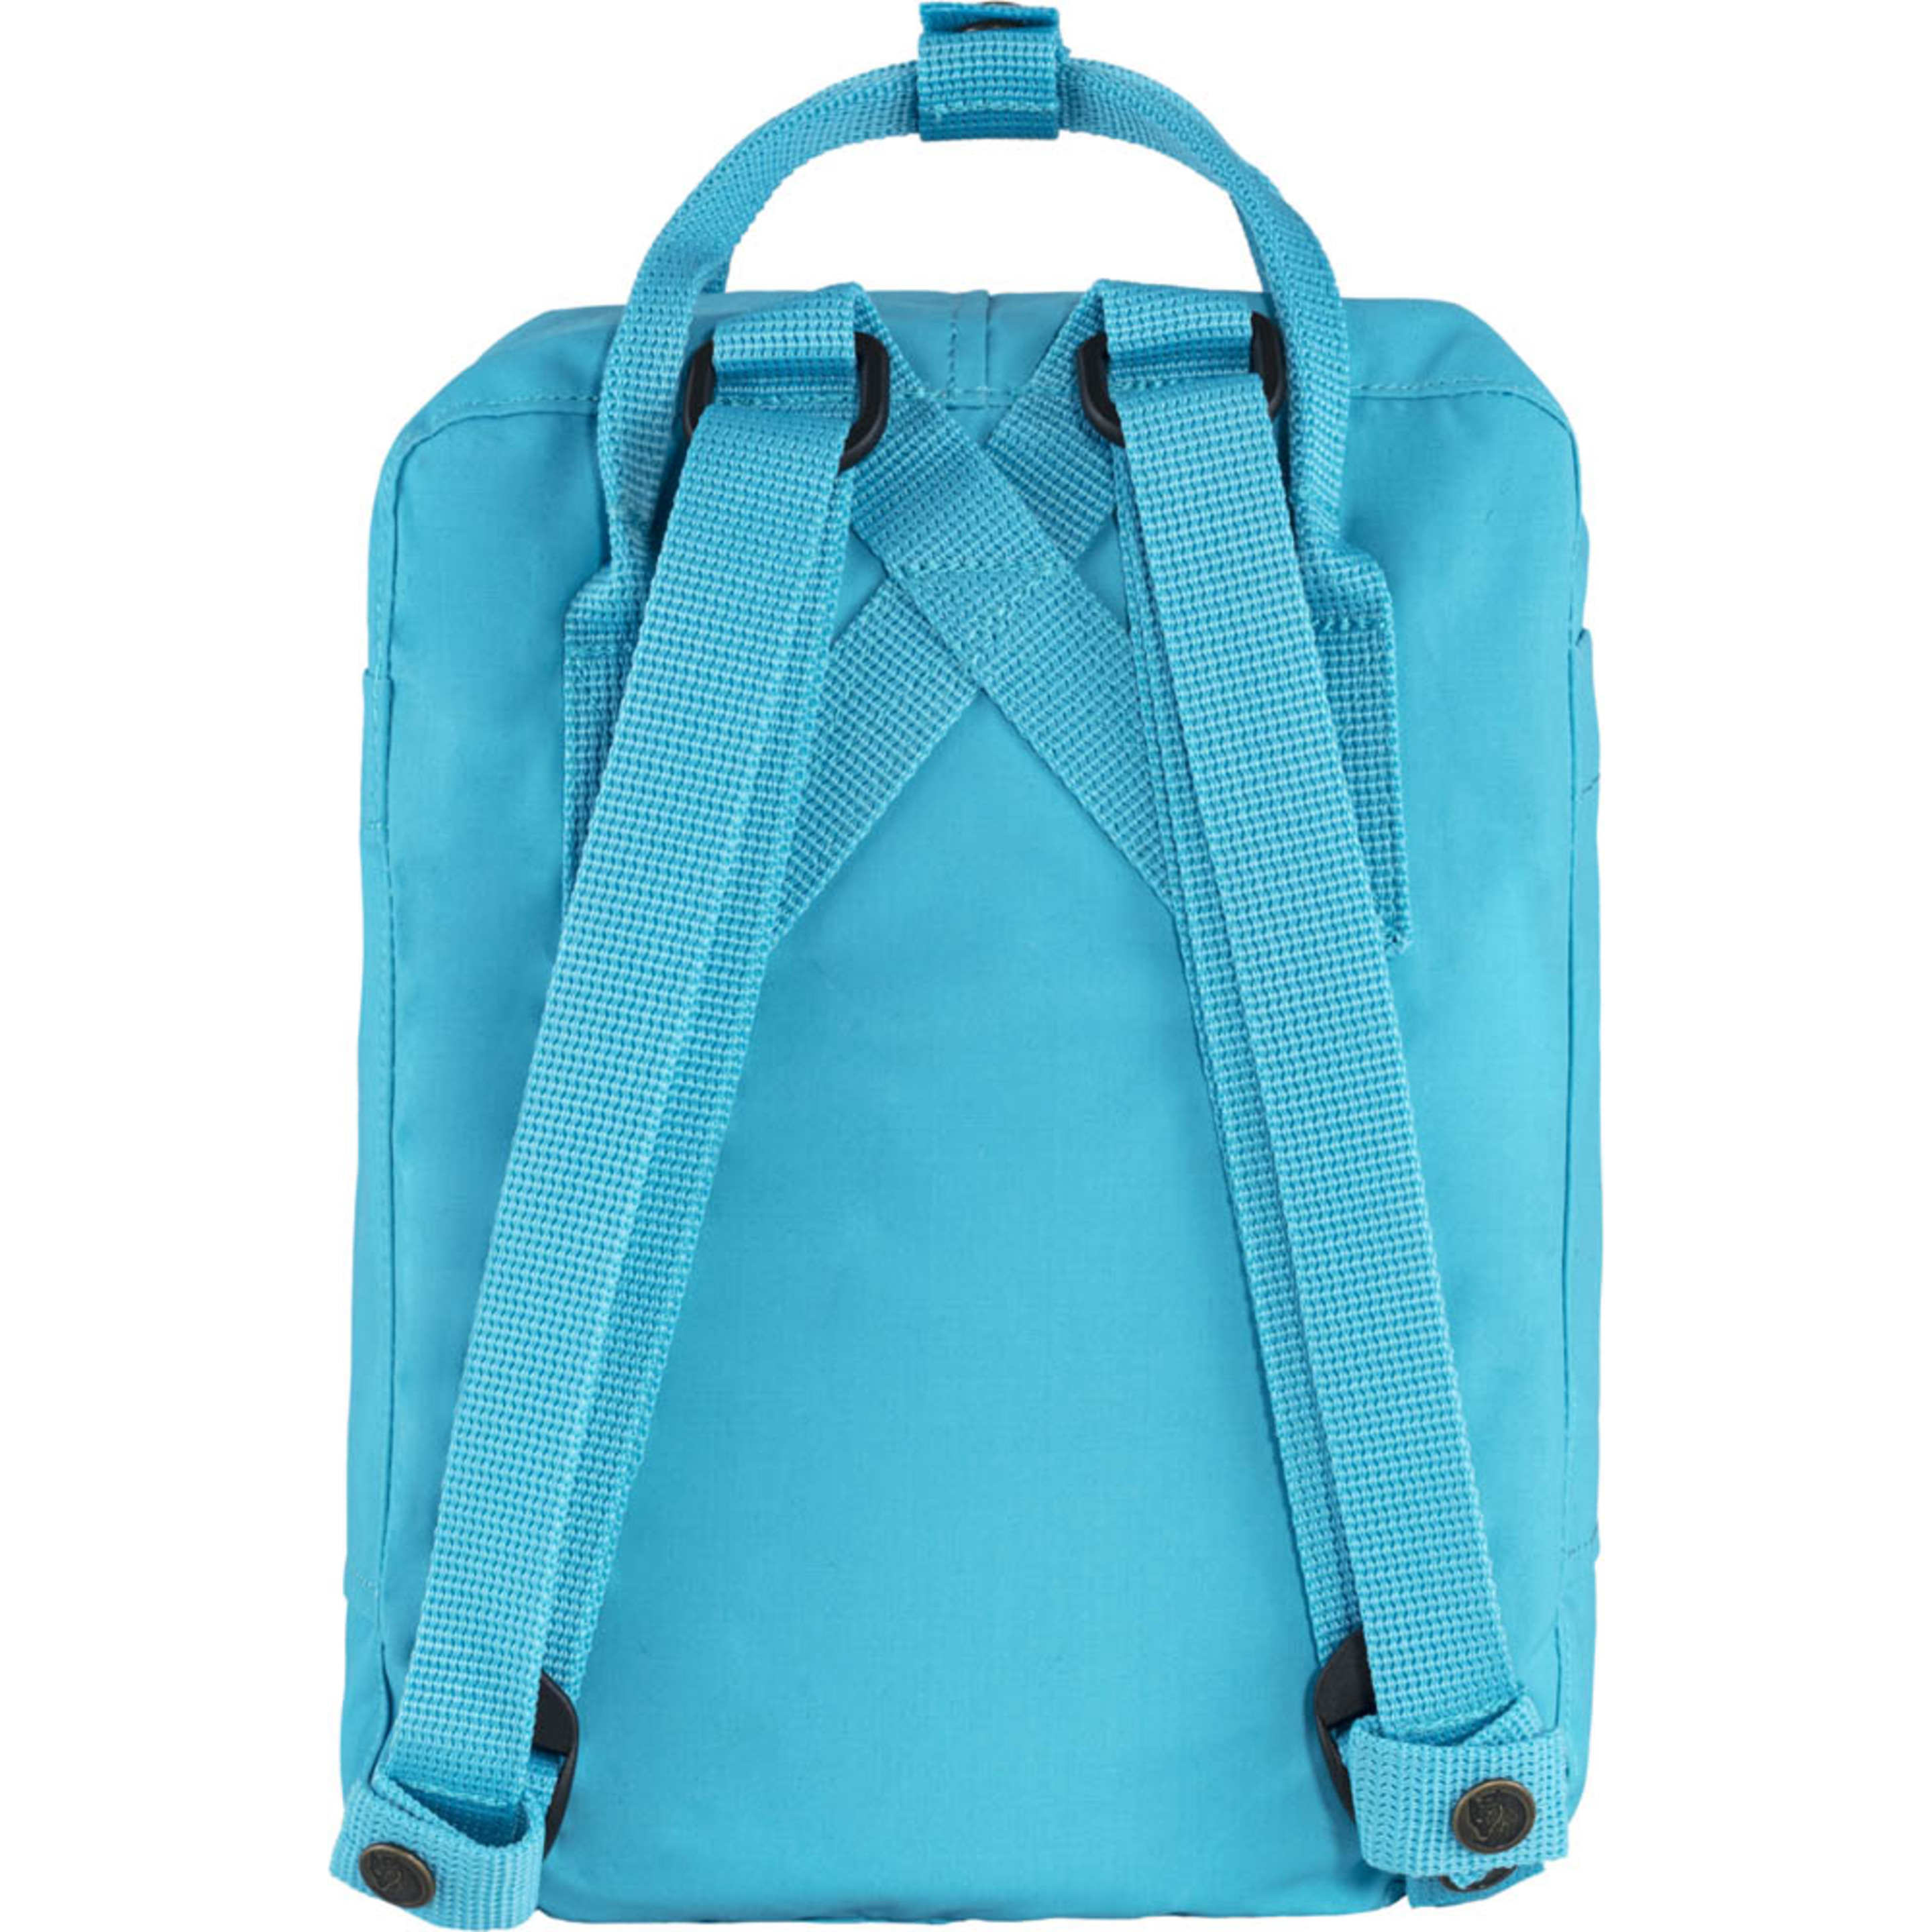 Fjallraven Kånken Mini Sports Backpack, Unisex-adult, Deep Turqoise, One Size - Multicolor  MKP